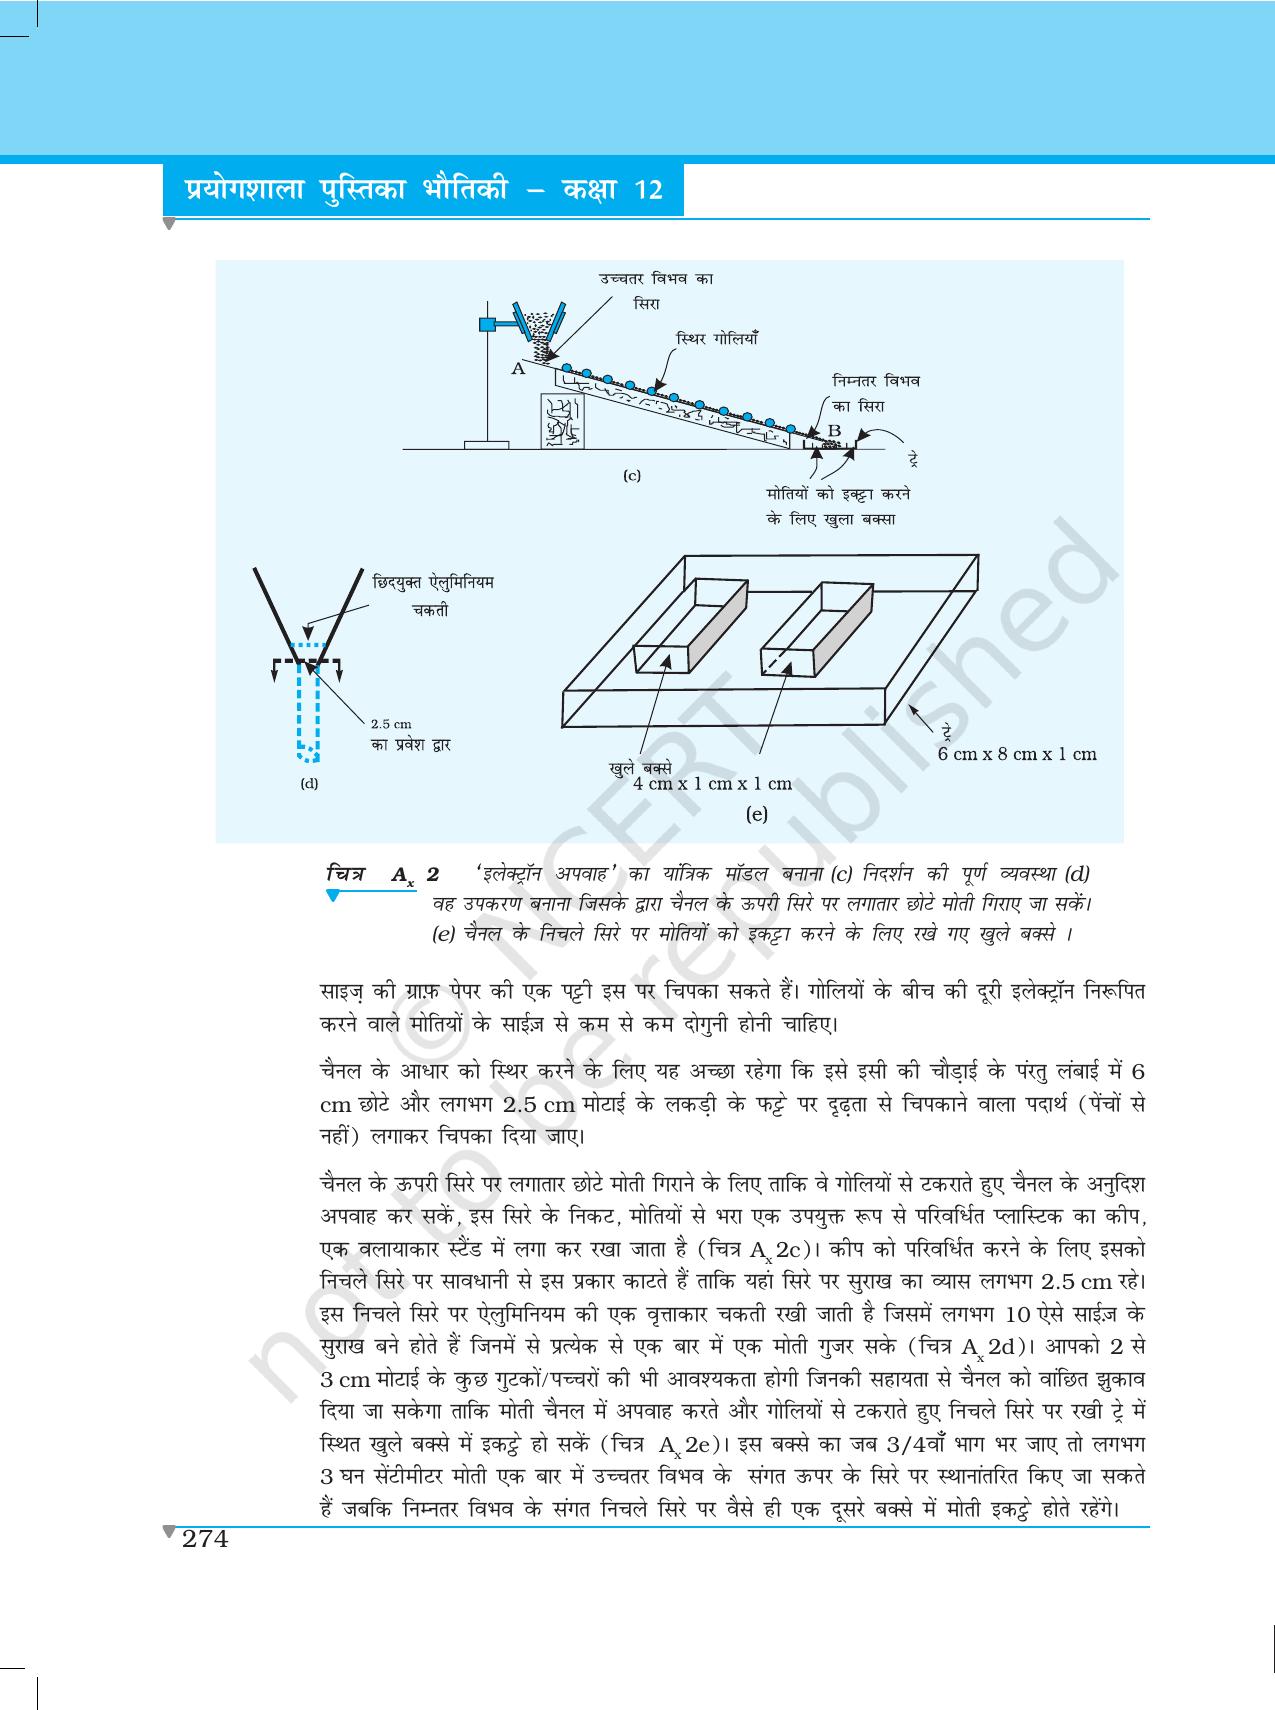 NCERT Laboratory Manuals for Class XII भौतिकी - परिशिष्ट - Page 3